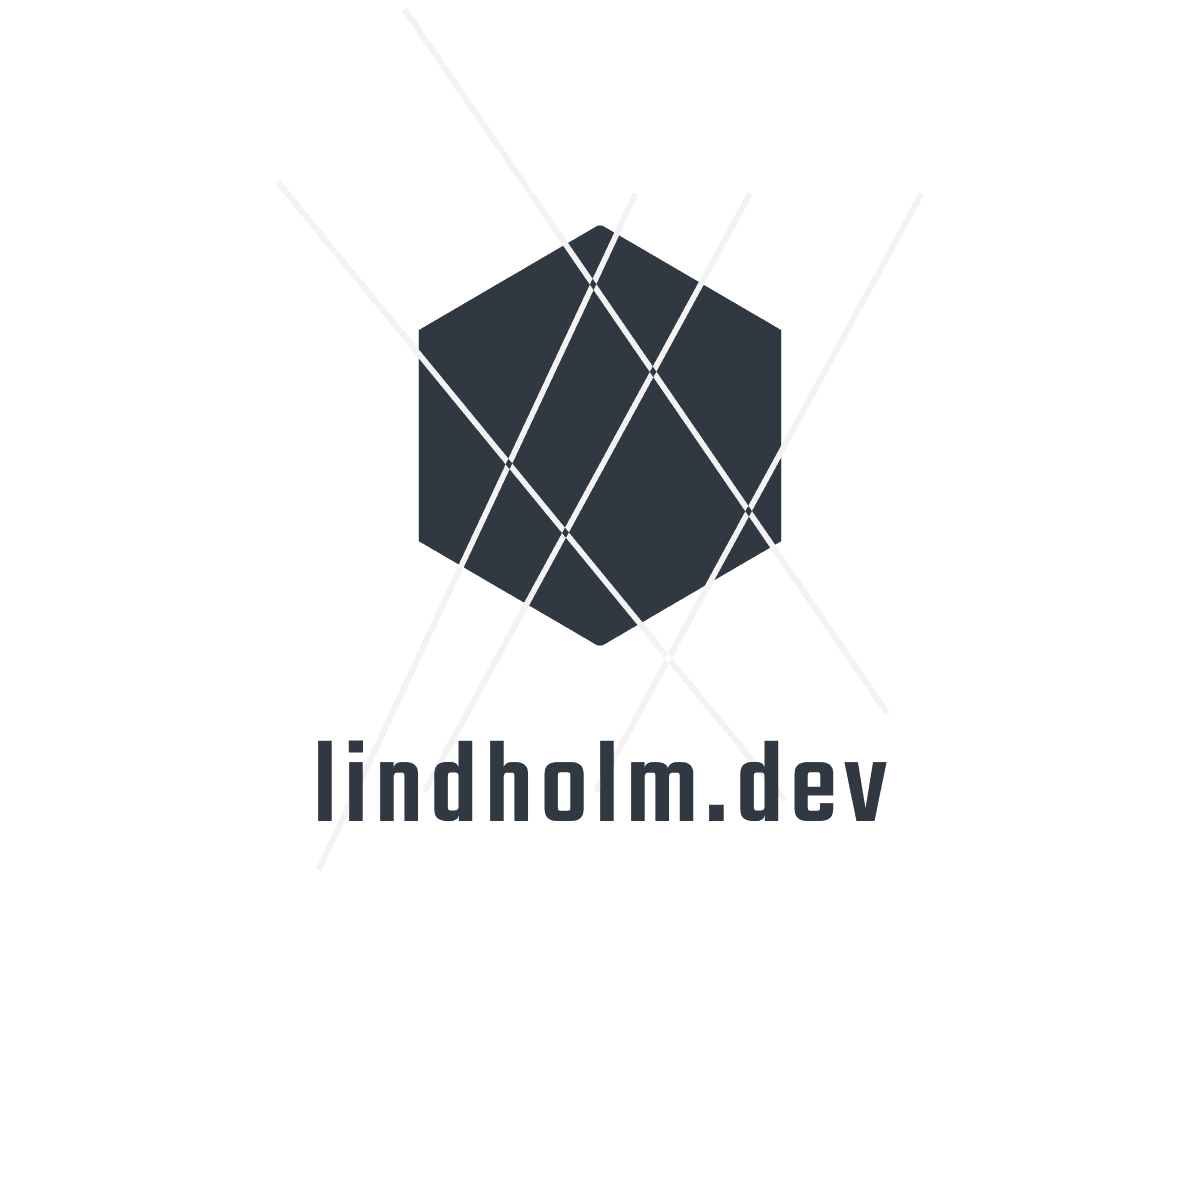 lindholm.dev logo